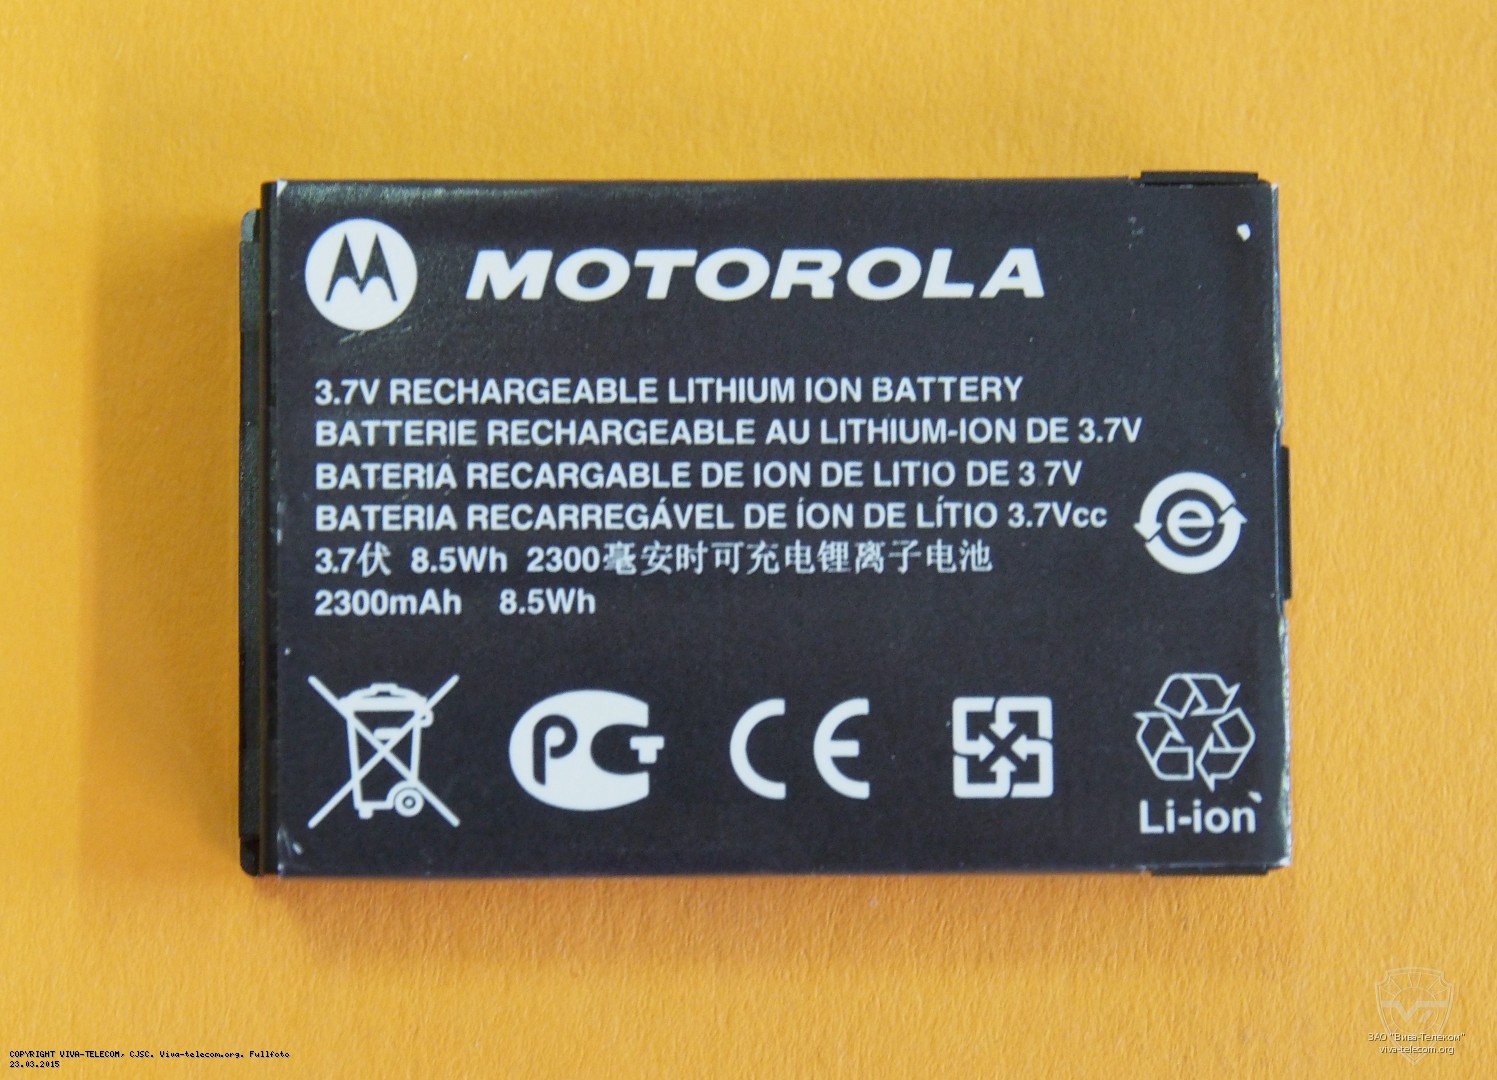    Motorola SL1600